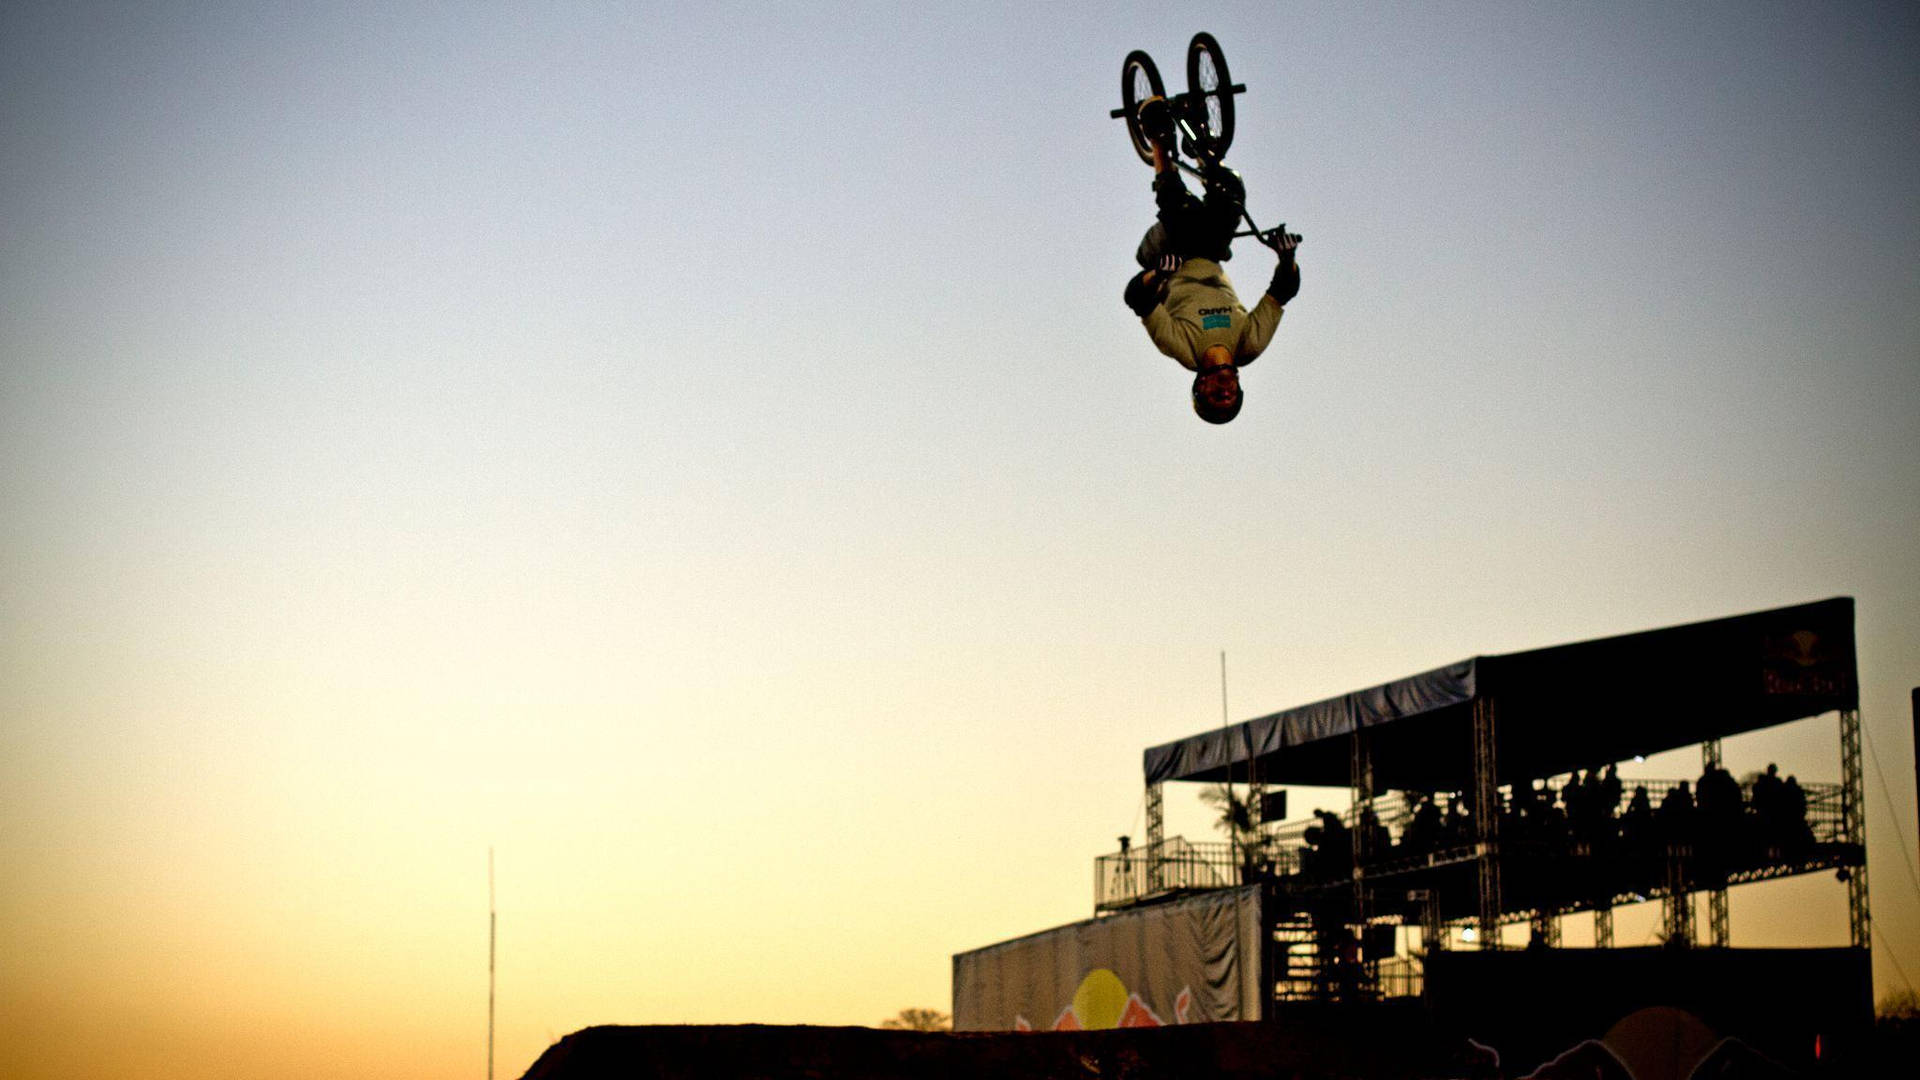 X Games BMX Aerial Stunt Wallpaper